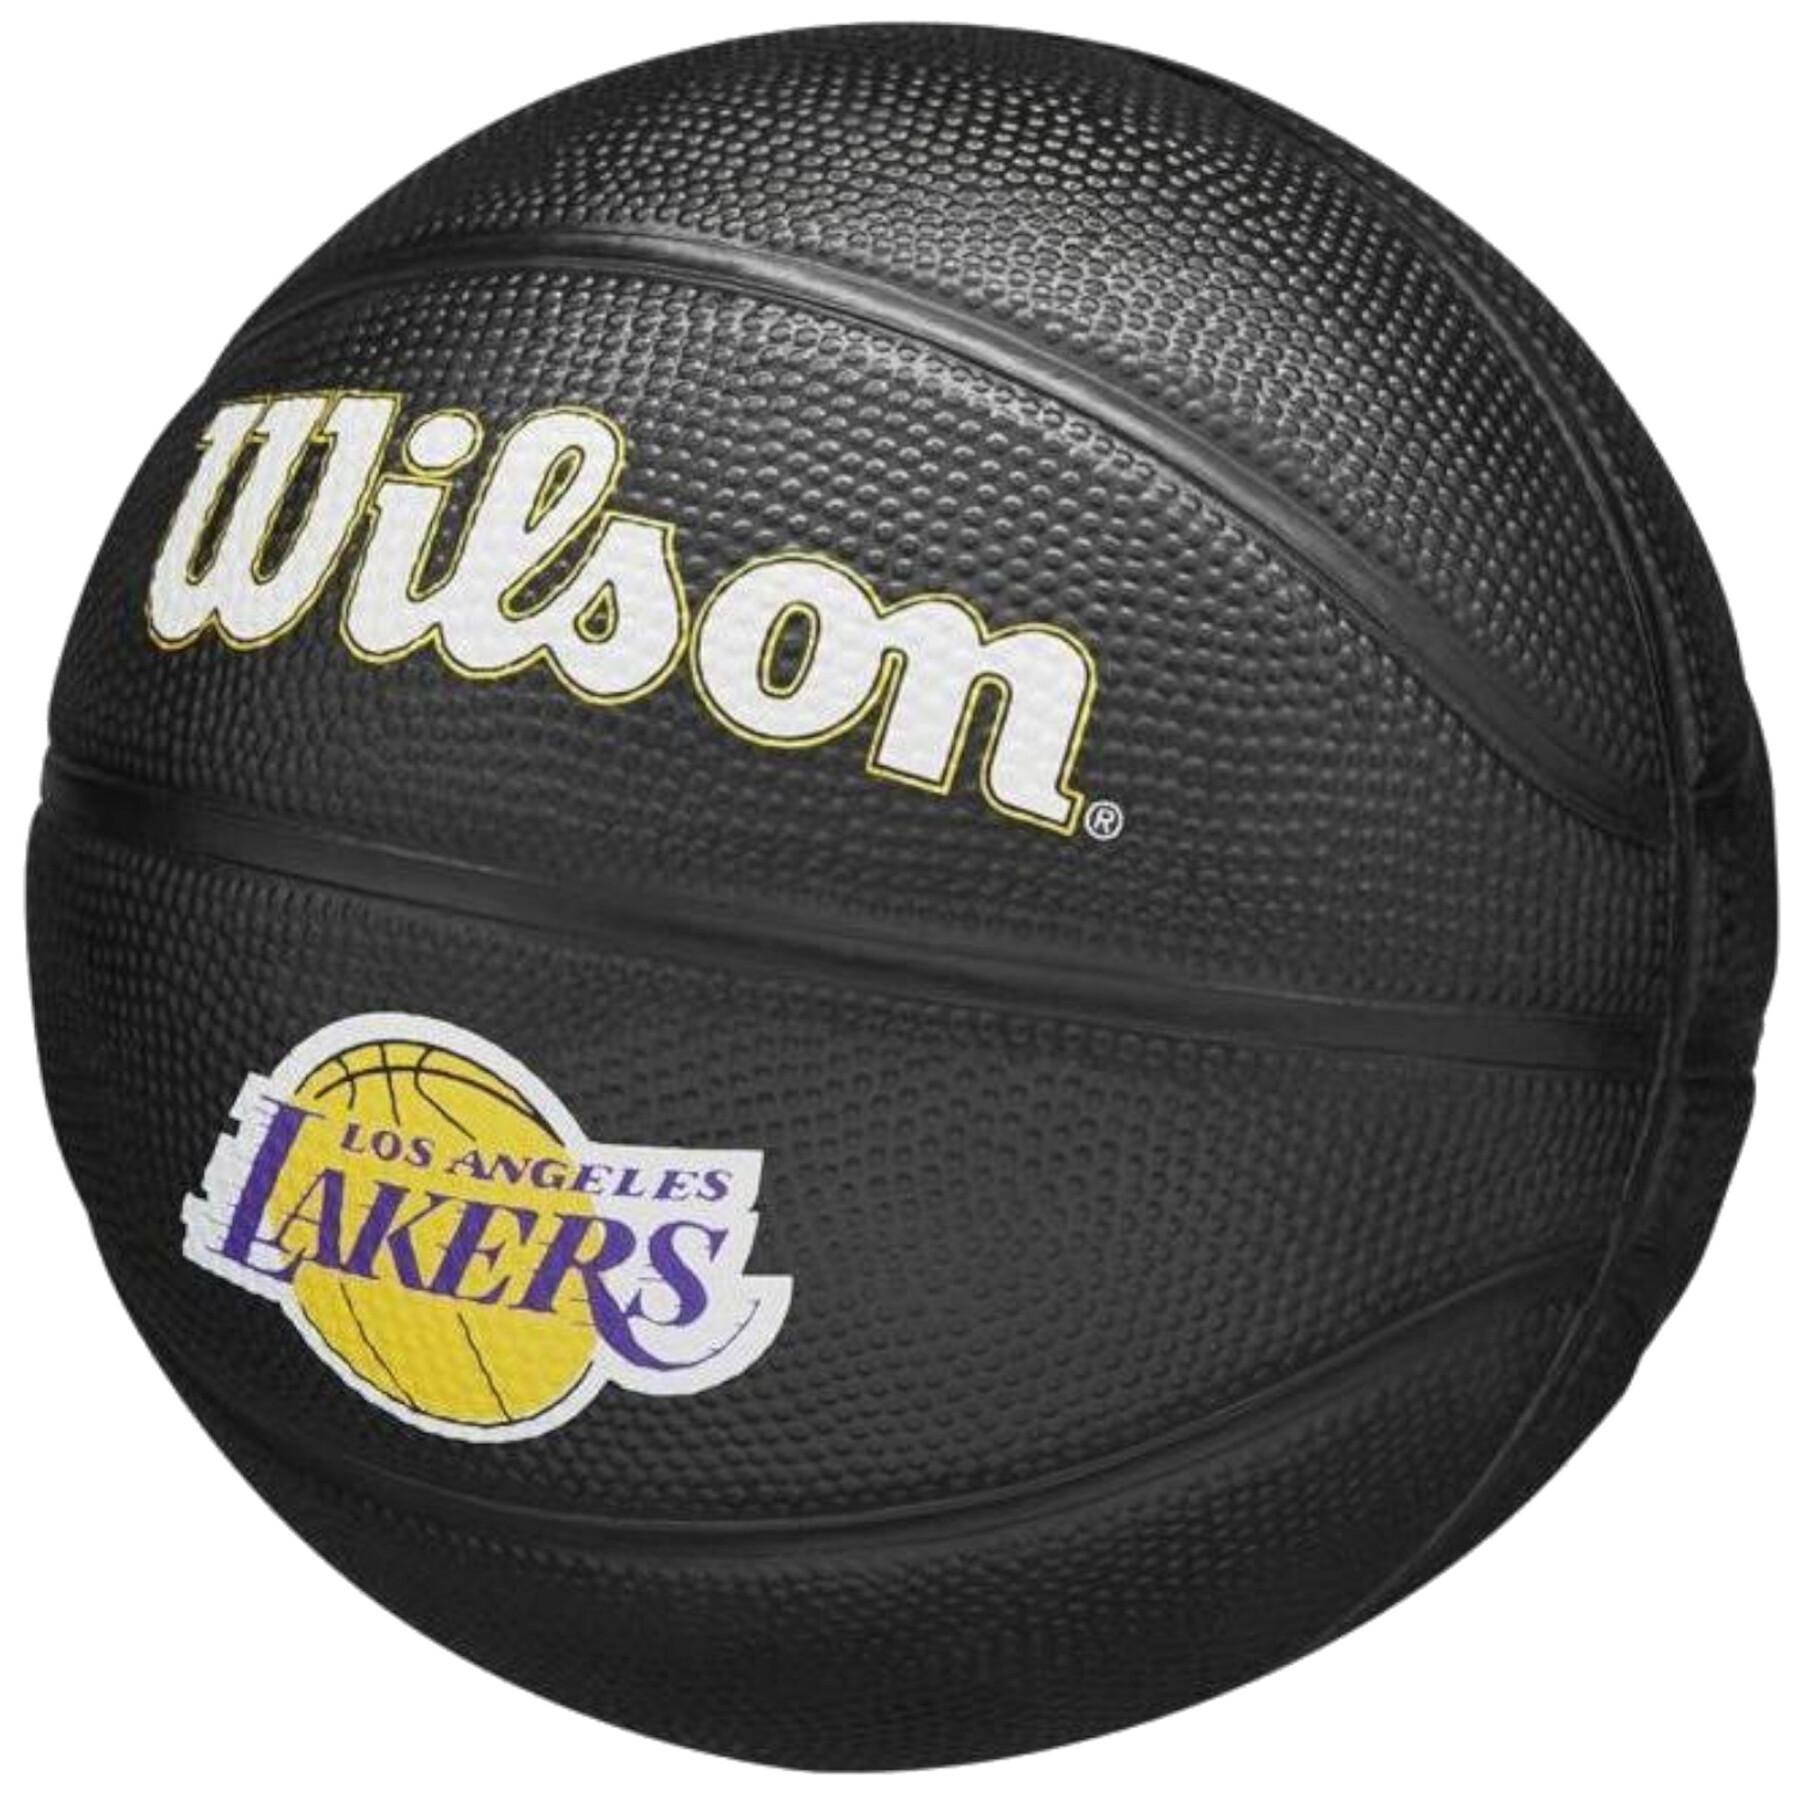 Mini balão nba Los Angeles Lakers